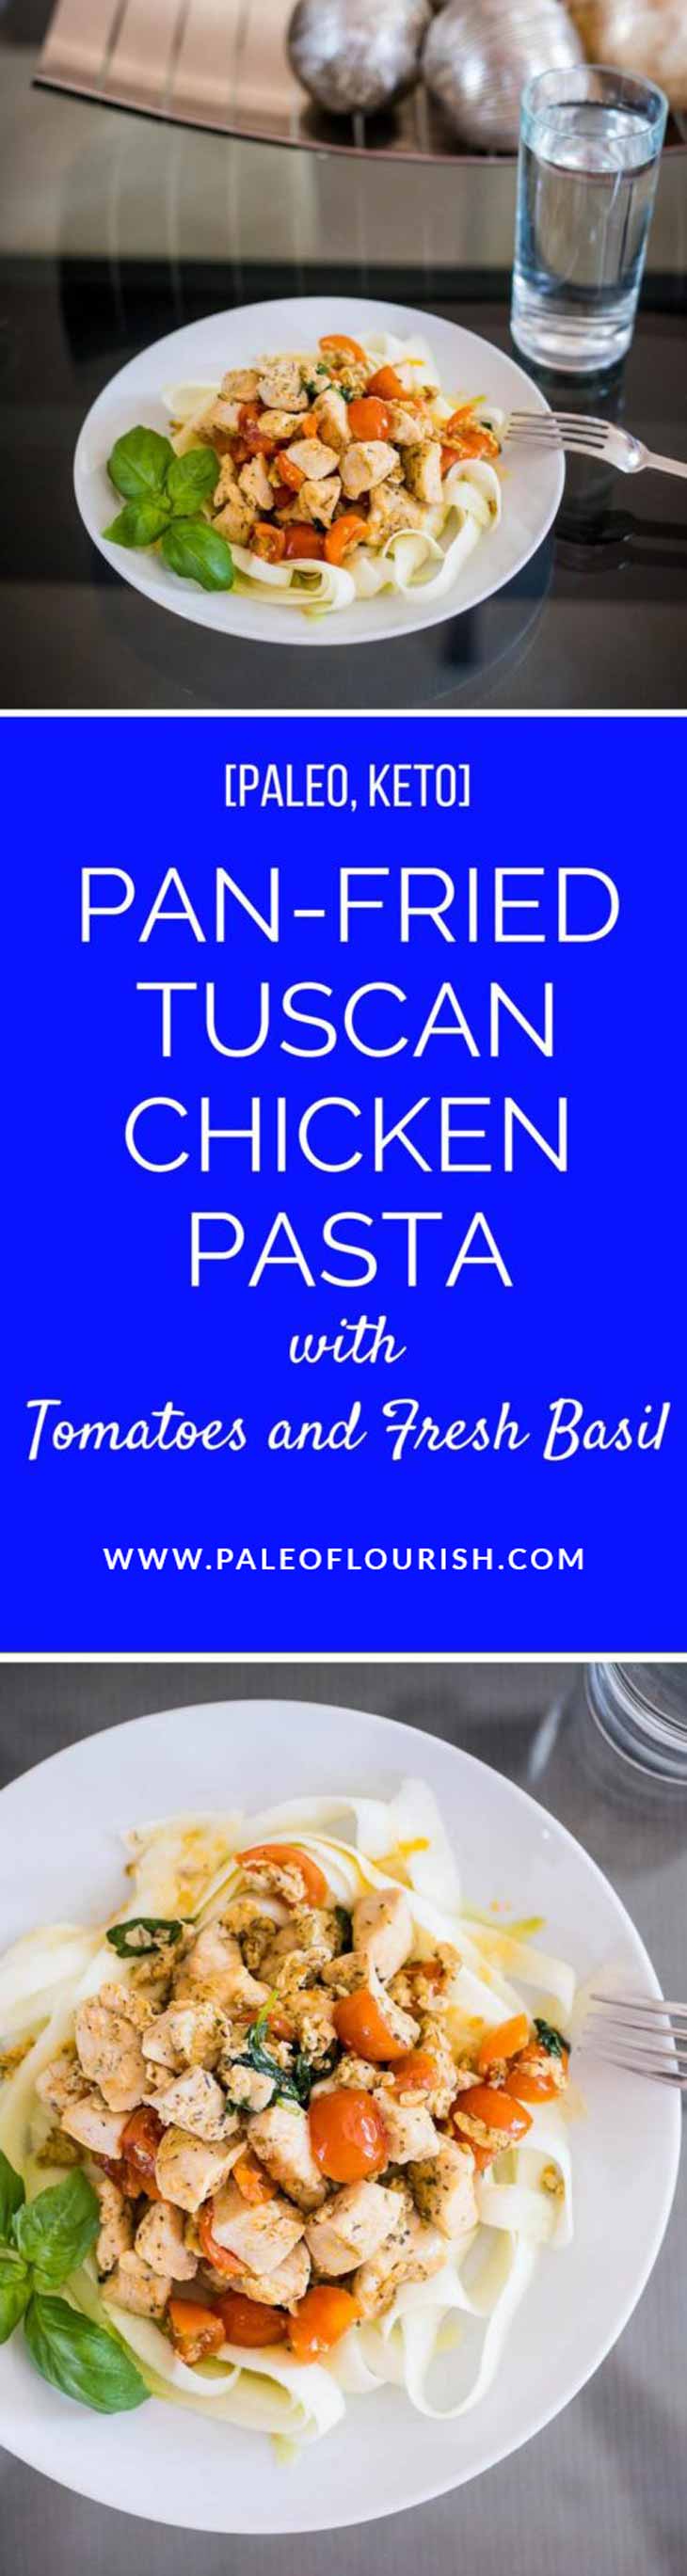 Pan-Fried Tuscan Chicken Pasta Recipe with Tomatoes and Fresh Basil [Paleo, Keto] #paleo #keto #recipes - https://paleoflourish.com/pan-fried-tuscan-chicken-pasta-recipe-paleo-keto